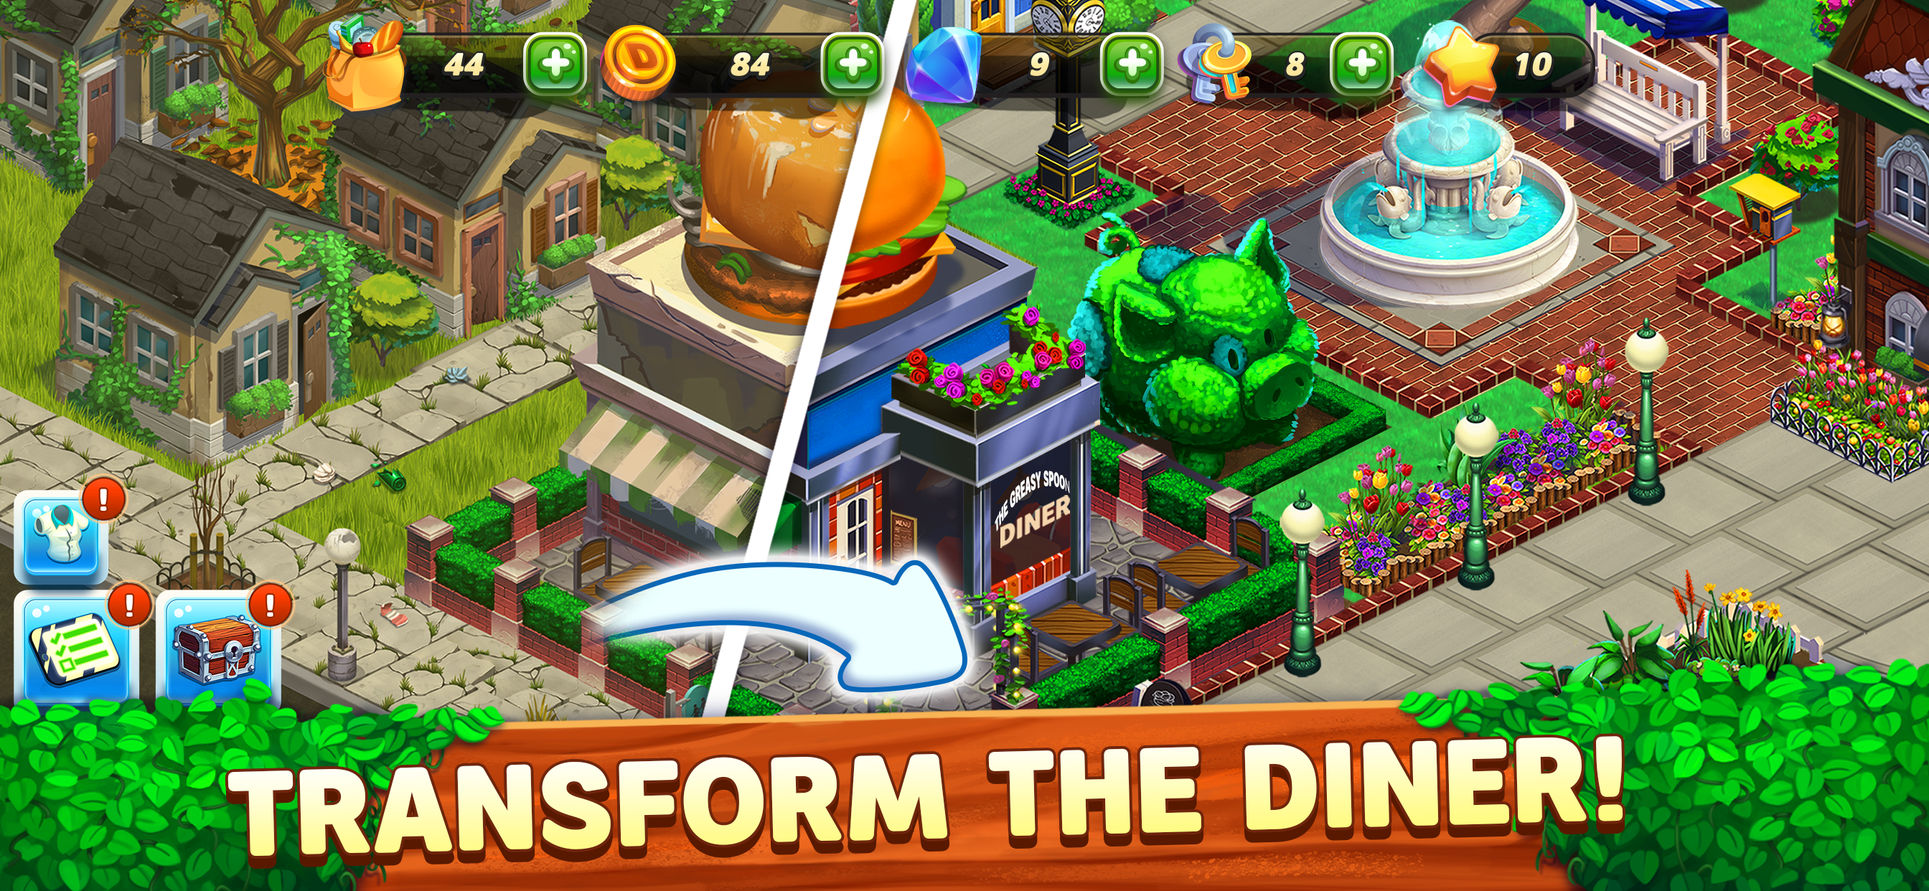 Diner Dash 2 free. download full Version Mac